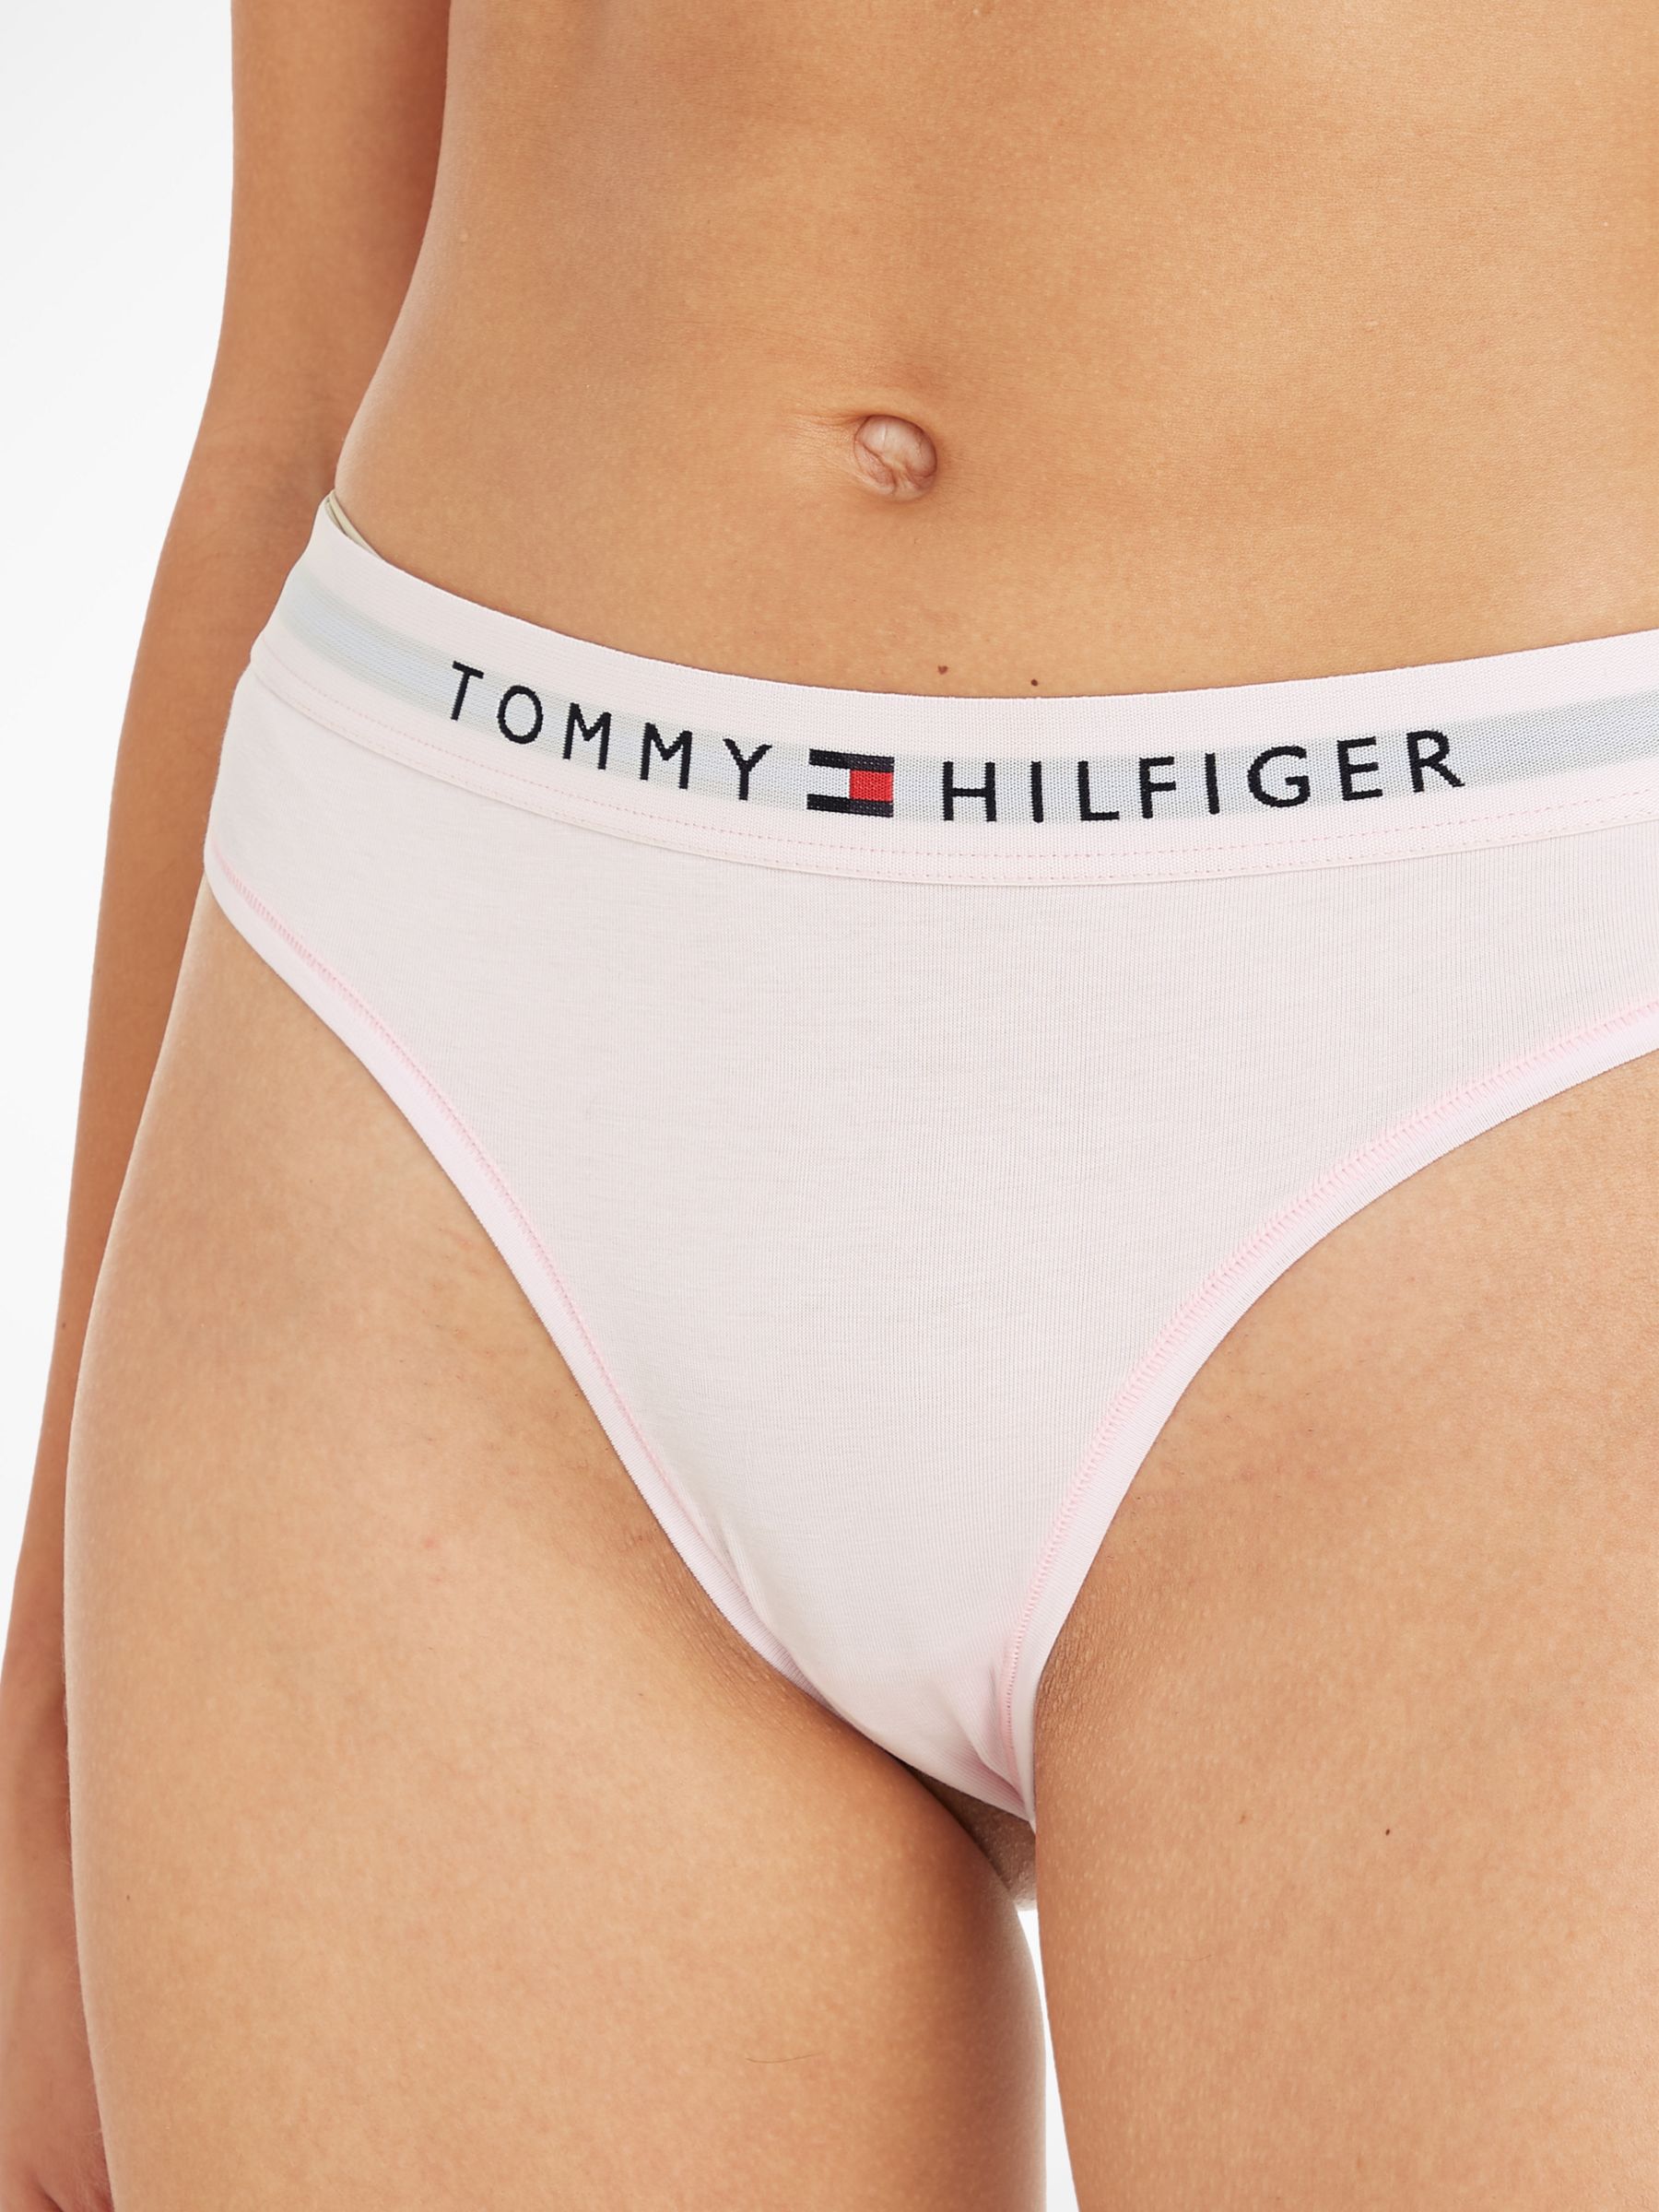 Tommy Hilfiger Logo Waistband Thong, Light Pink, XS